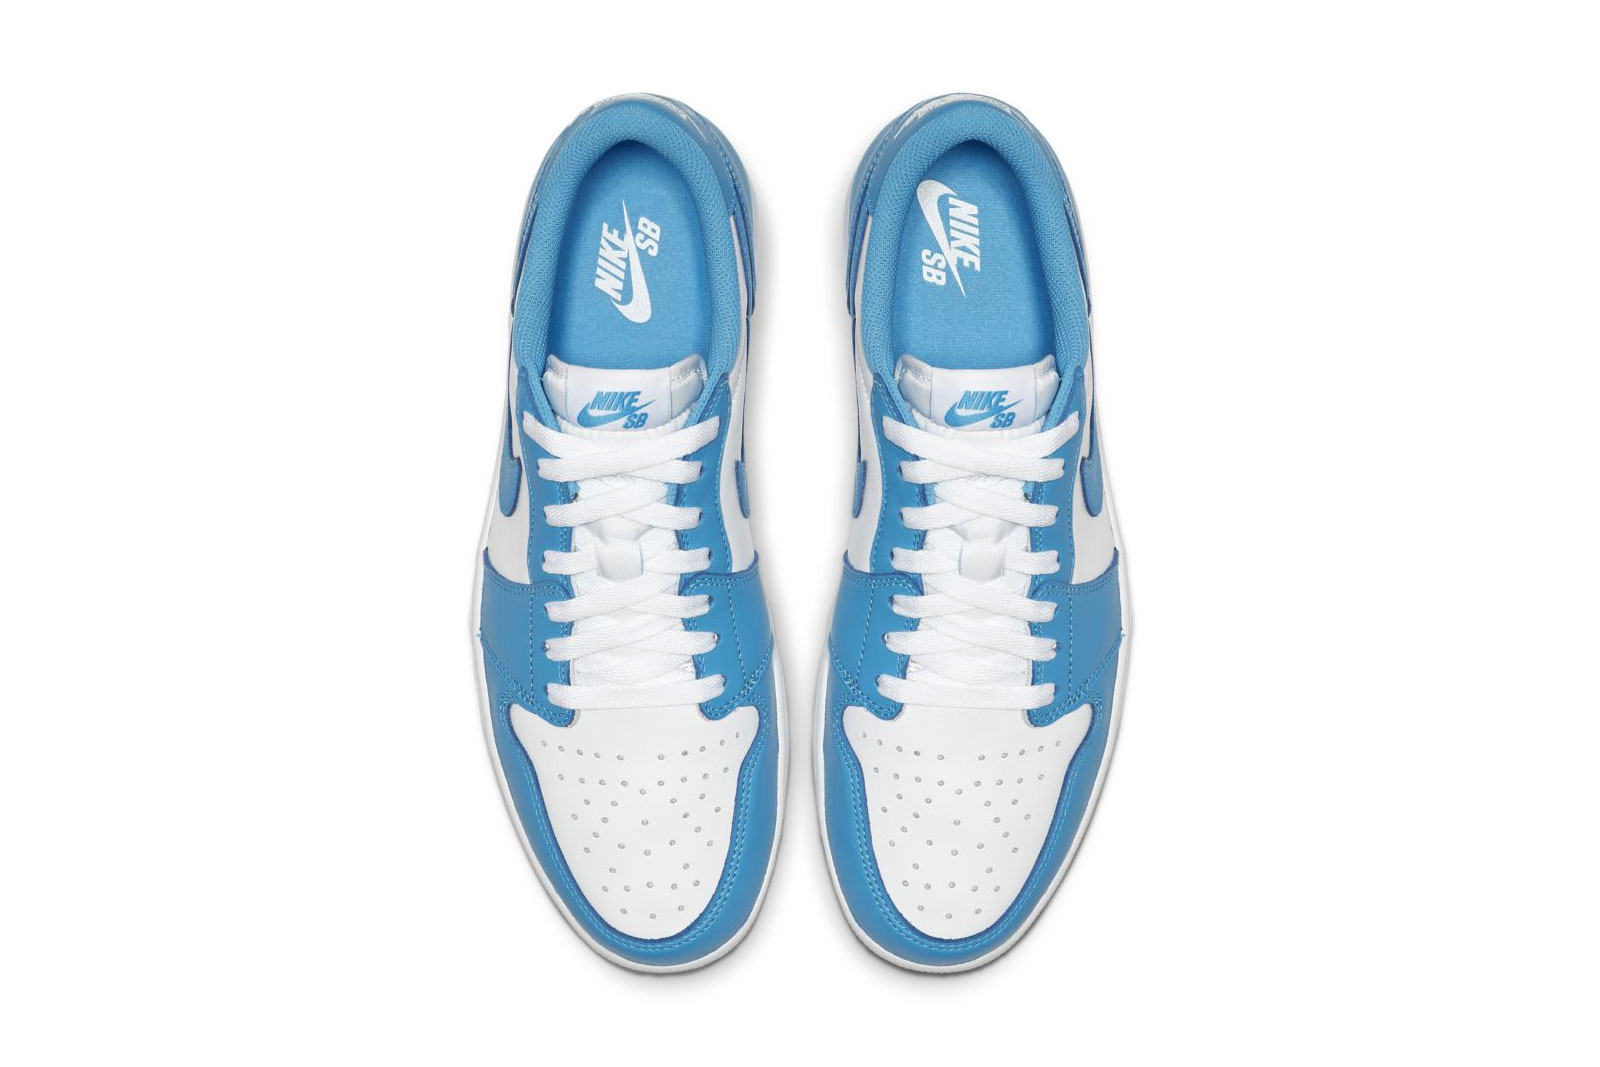 Nike SB x Air Jordan 1 Low “UNC” Sneaker Release | Drops | Hypebeast